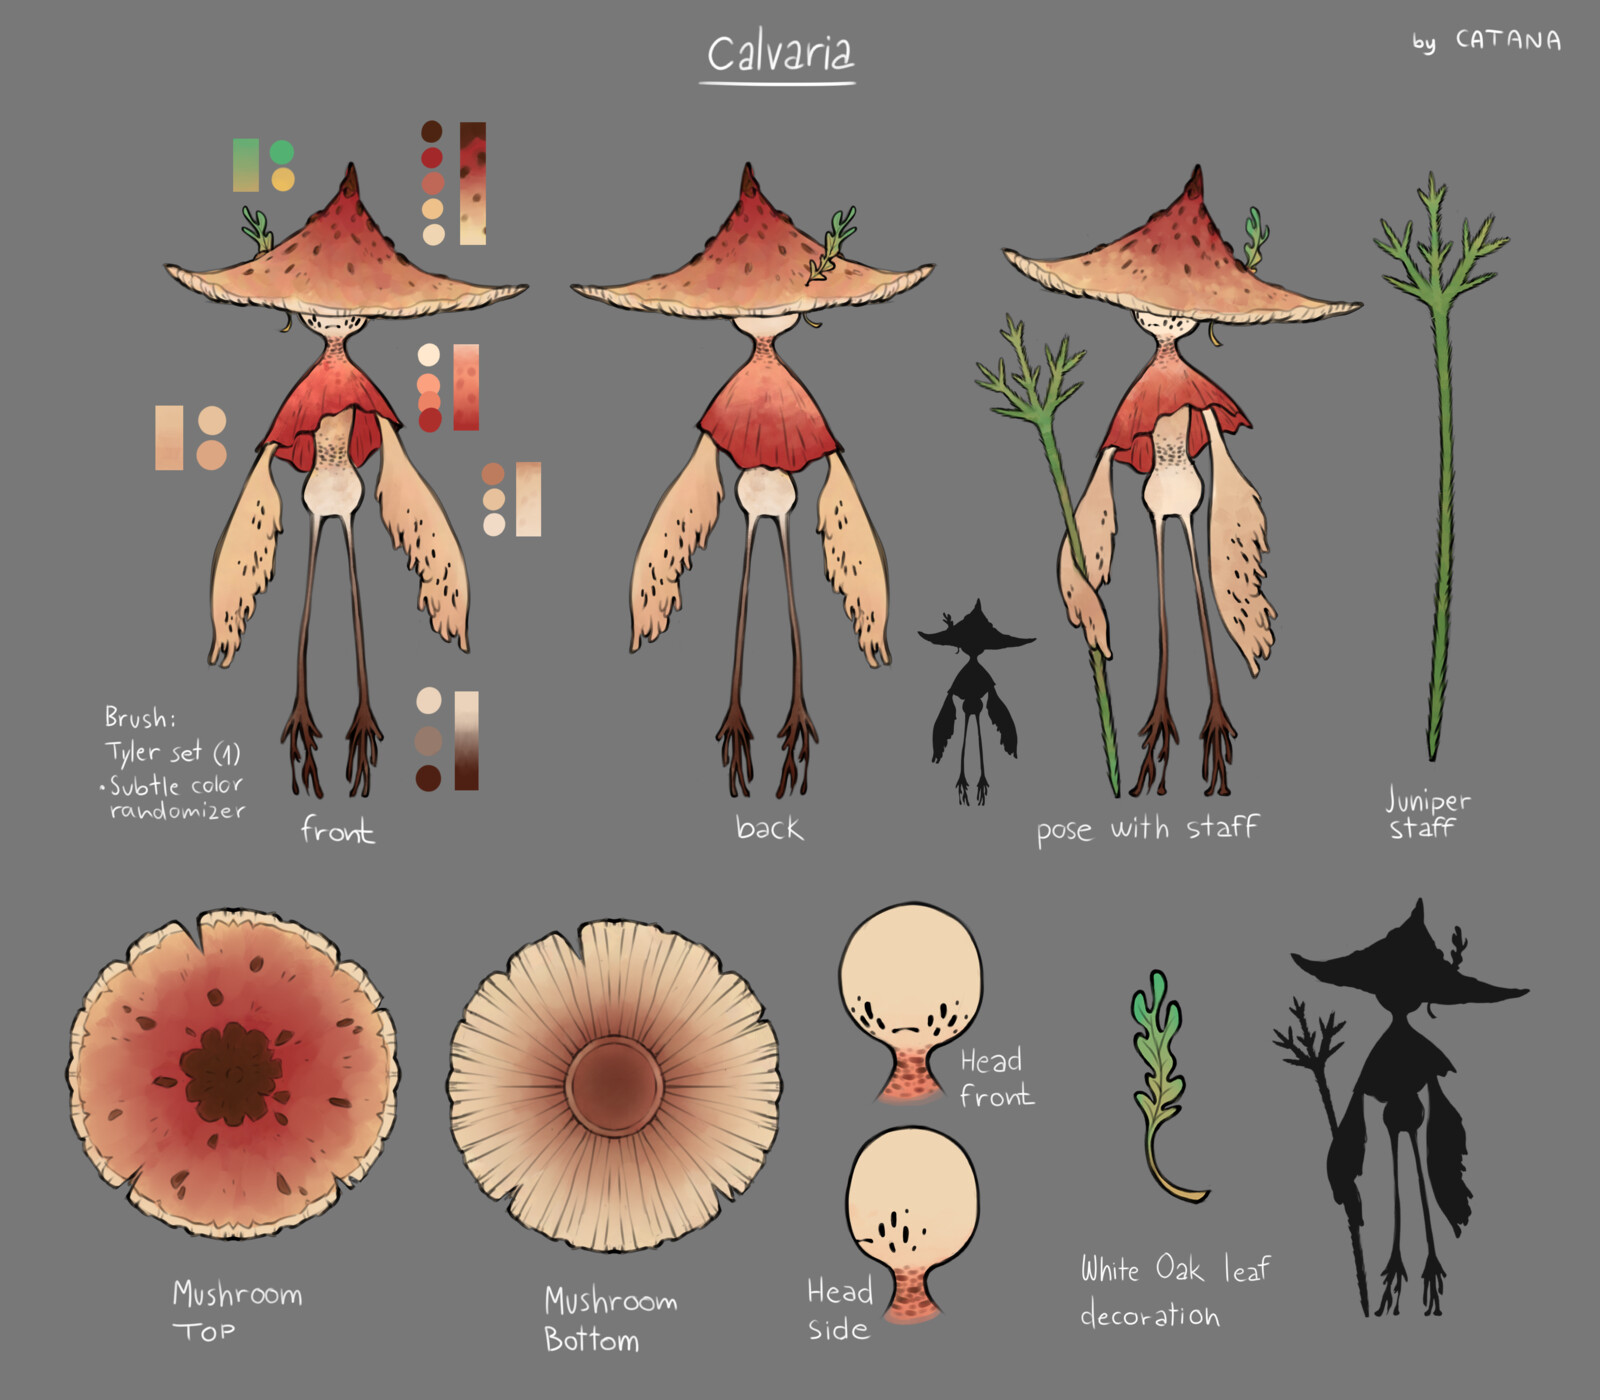 'Calvaria' Mushroom being character design